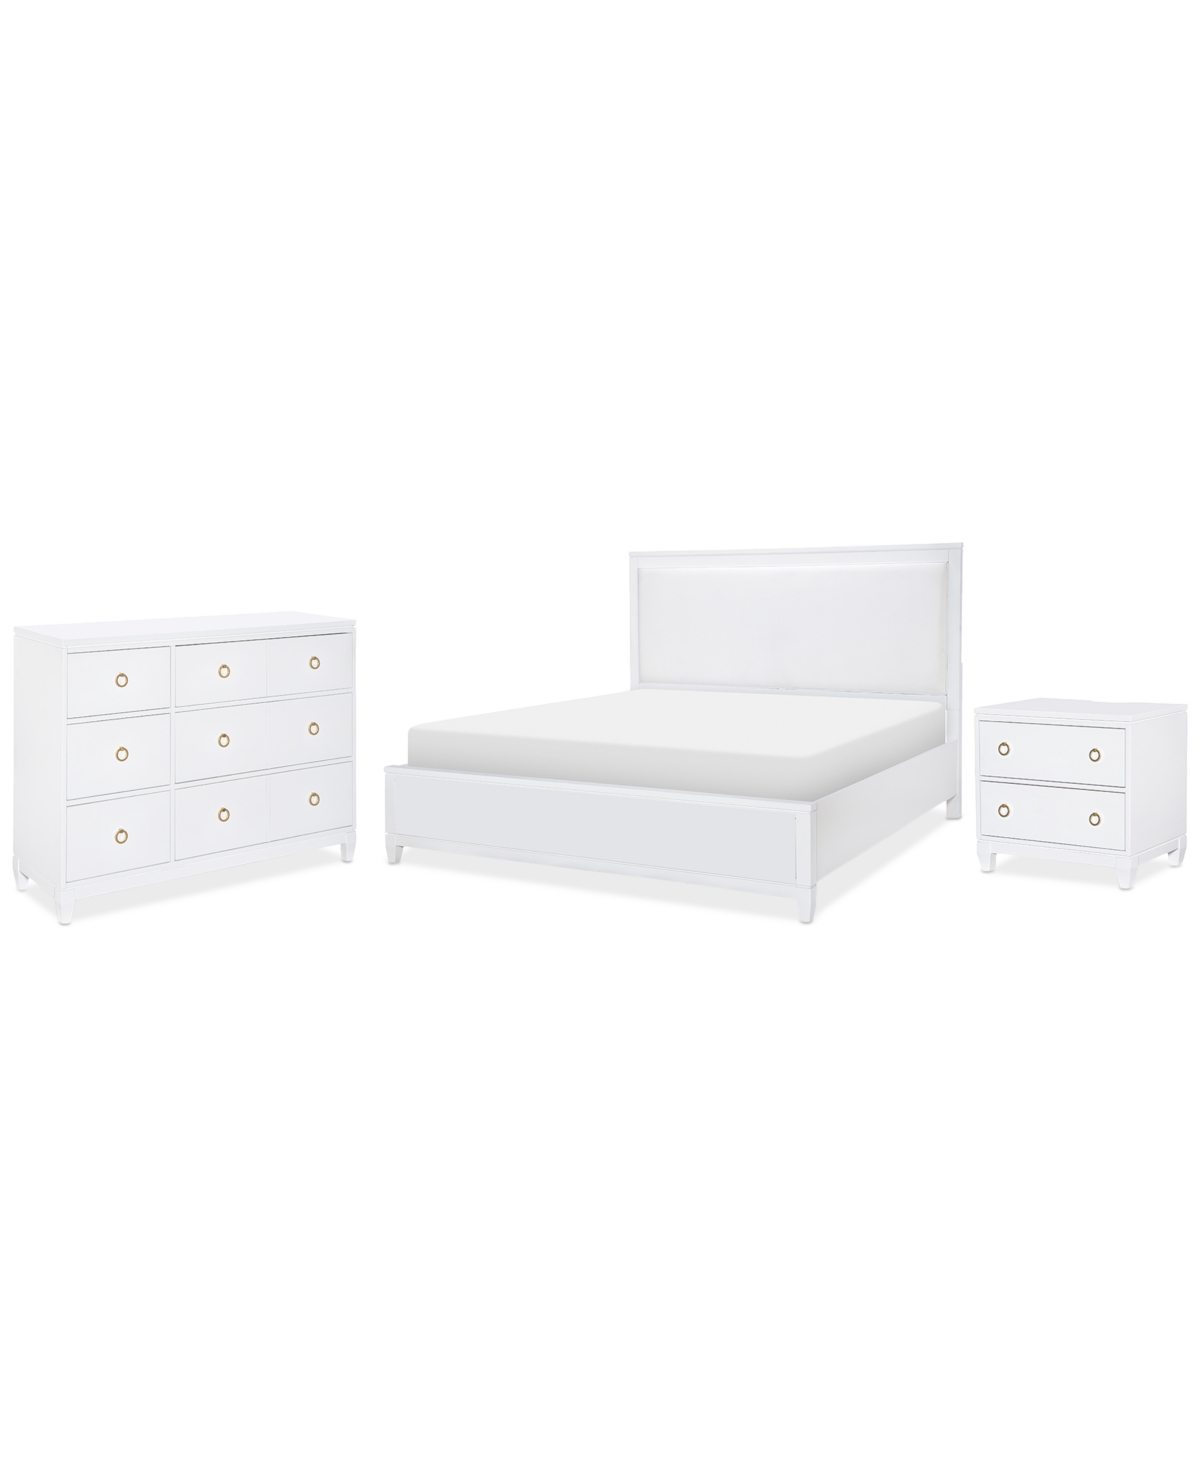 Shop Macy's Summerland 3pc Bedroom Set (california King Upholstered Bed, Dresser, Nightstand) In Blue